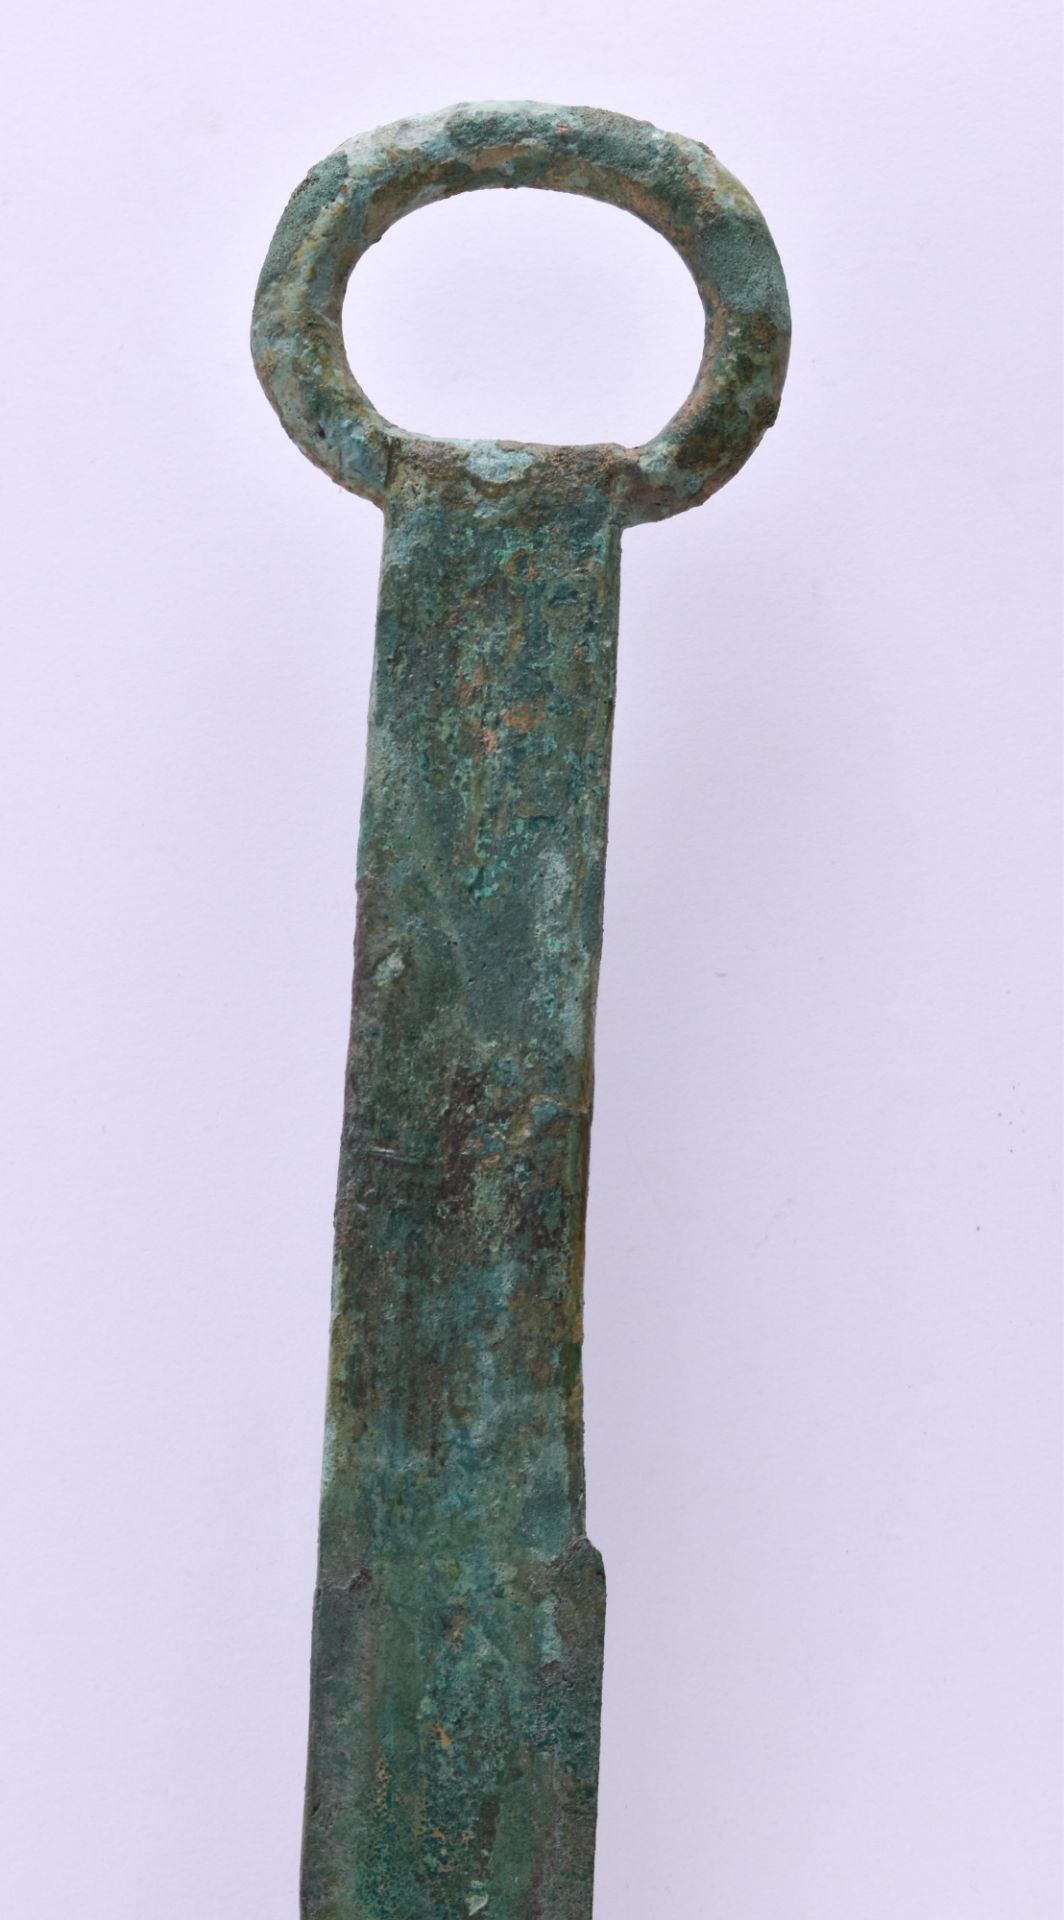  Bronze sword China Han dynasty - Image 3 of 4